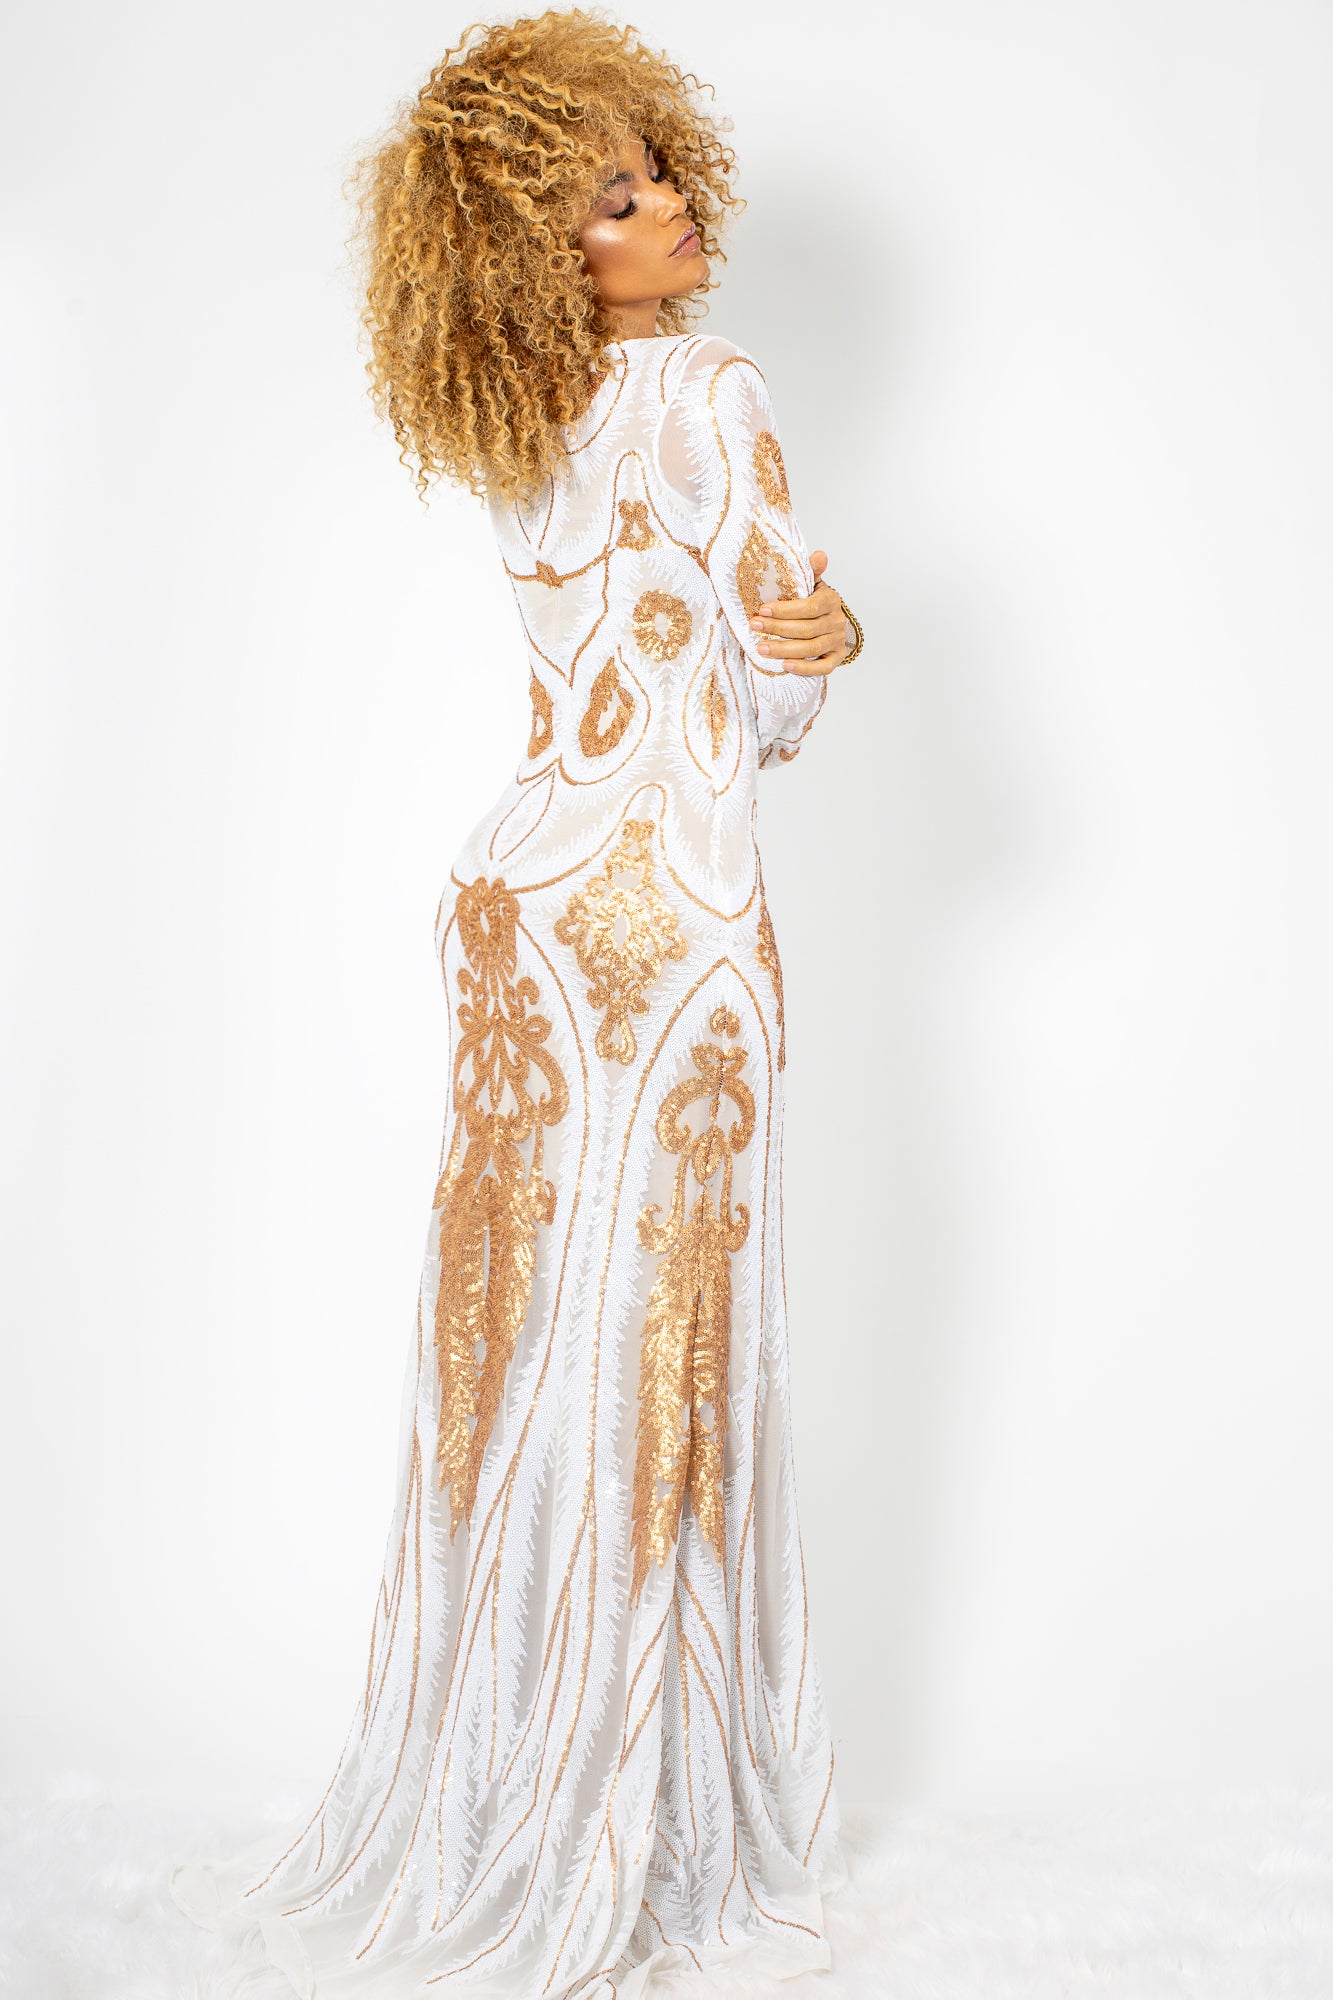 Fantasy white and gold dress by Diva161 on DeviantArt